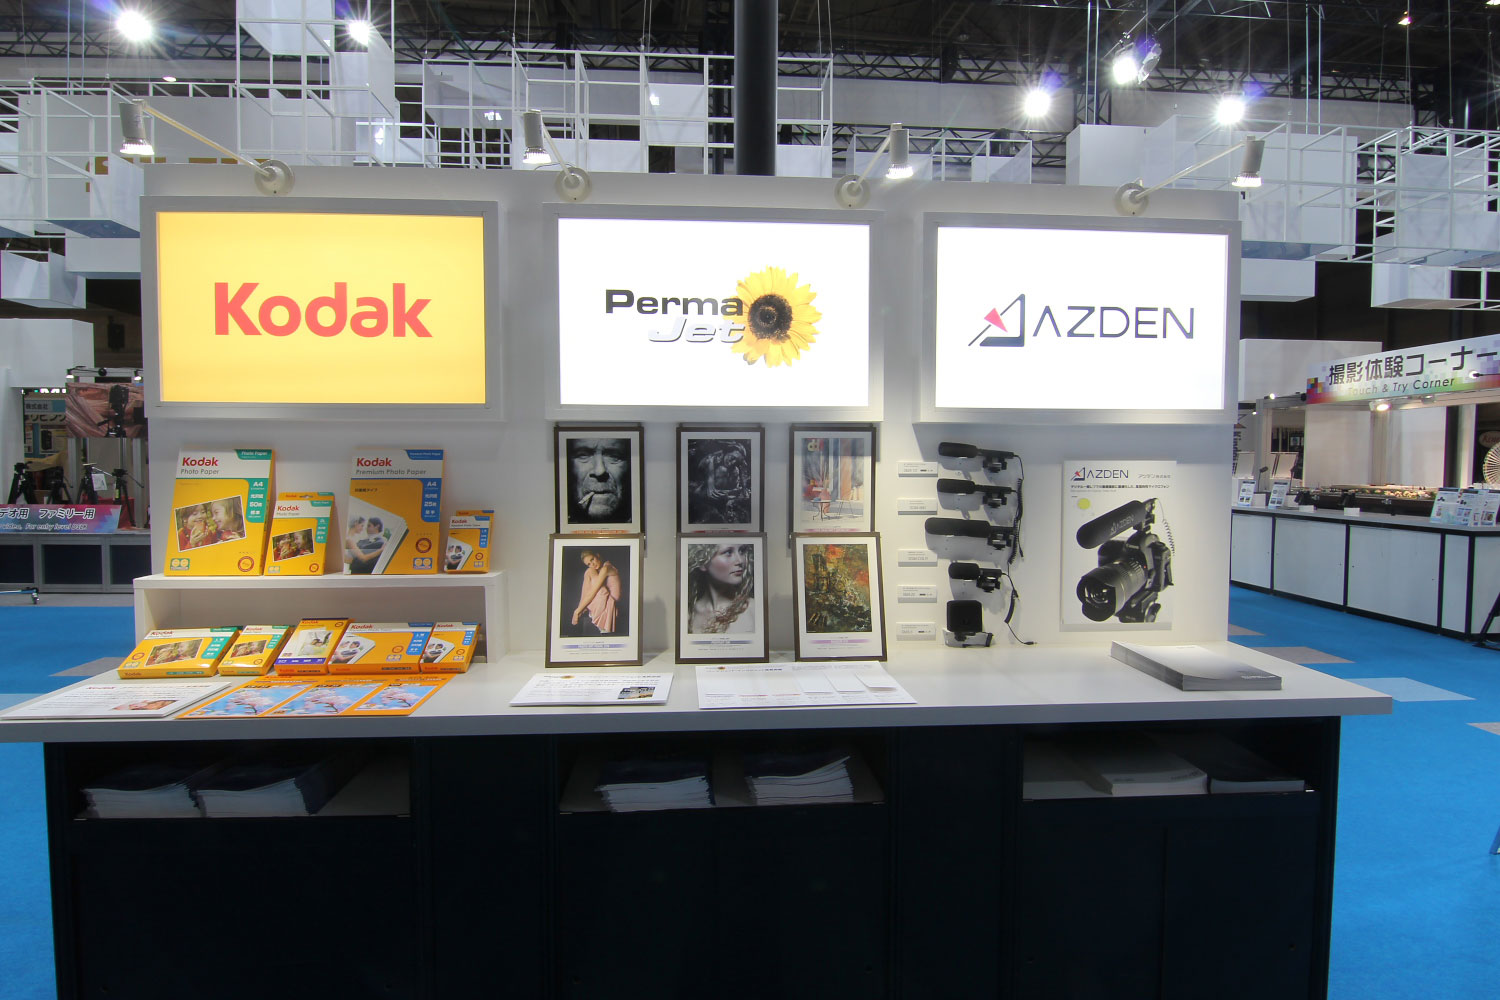 Kodak, Perma print paper and AZDEN microphone